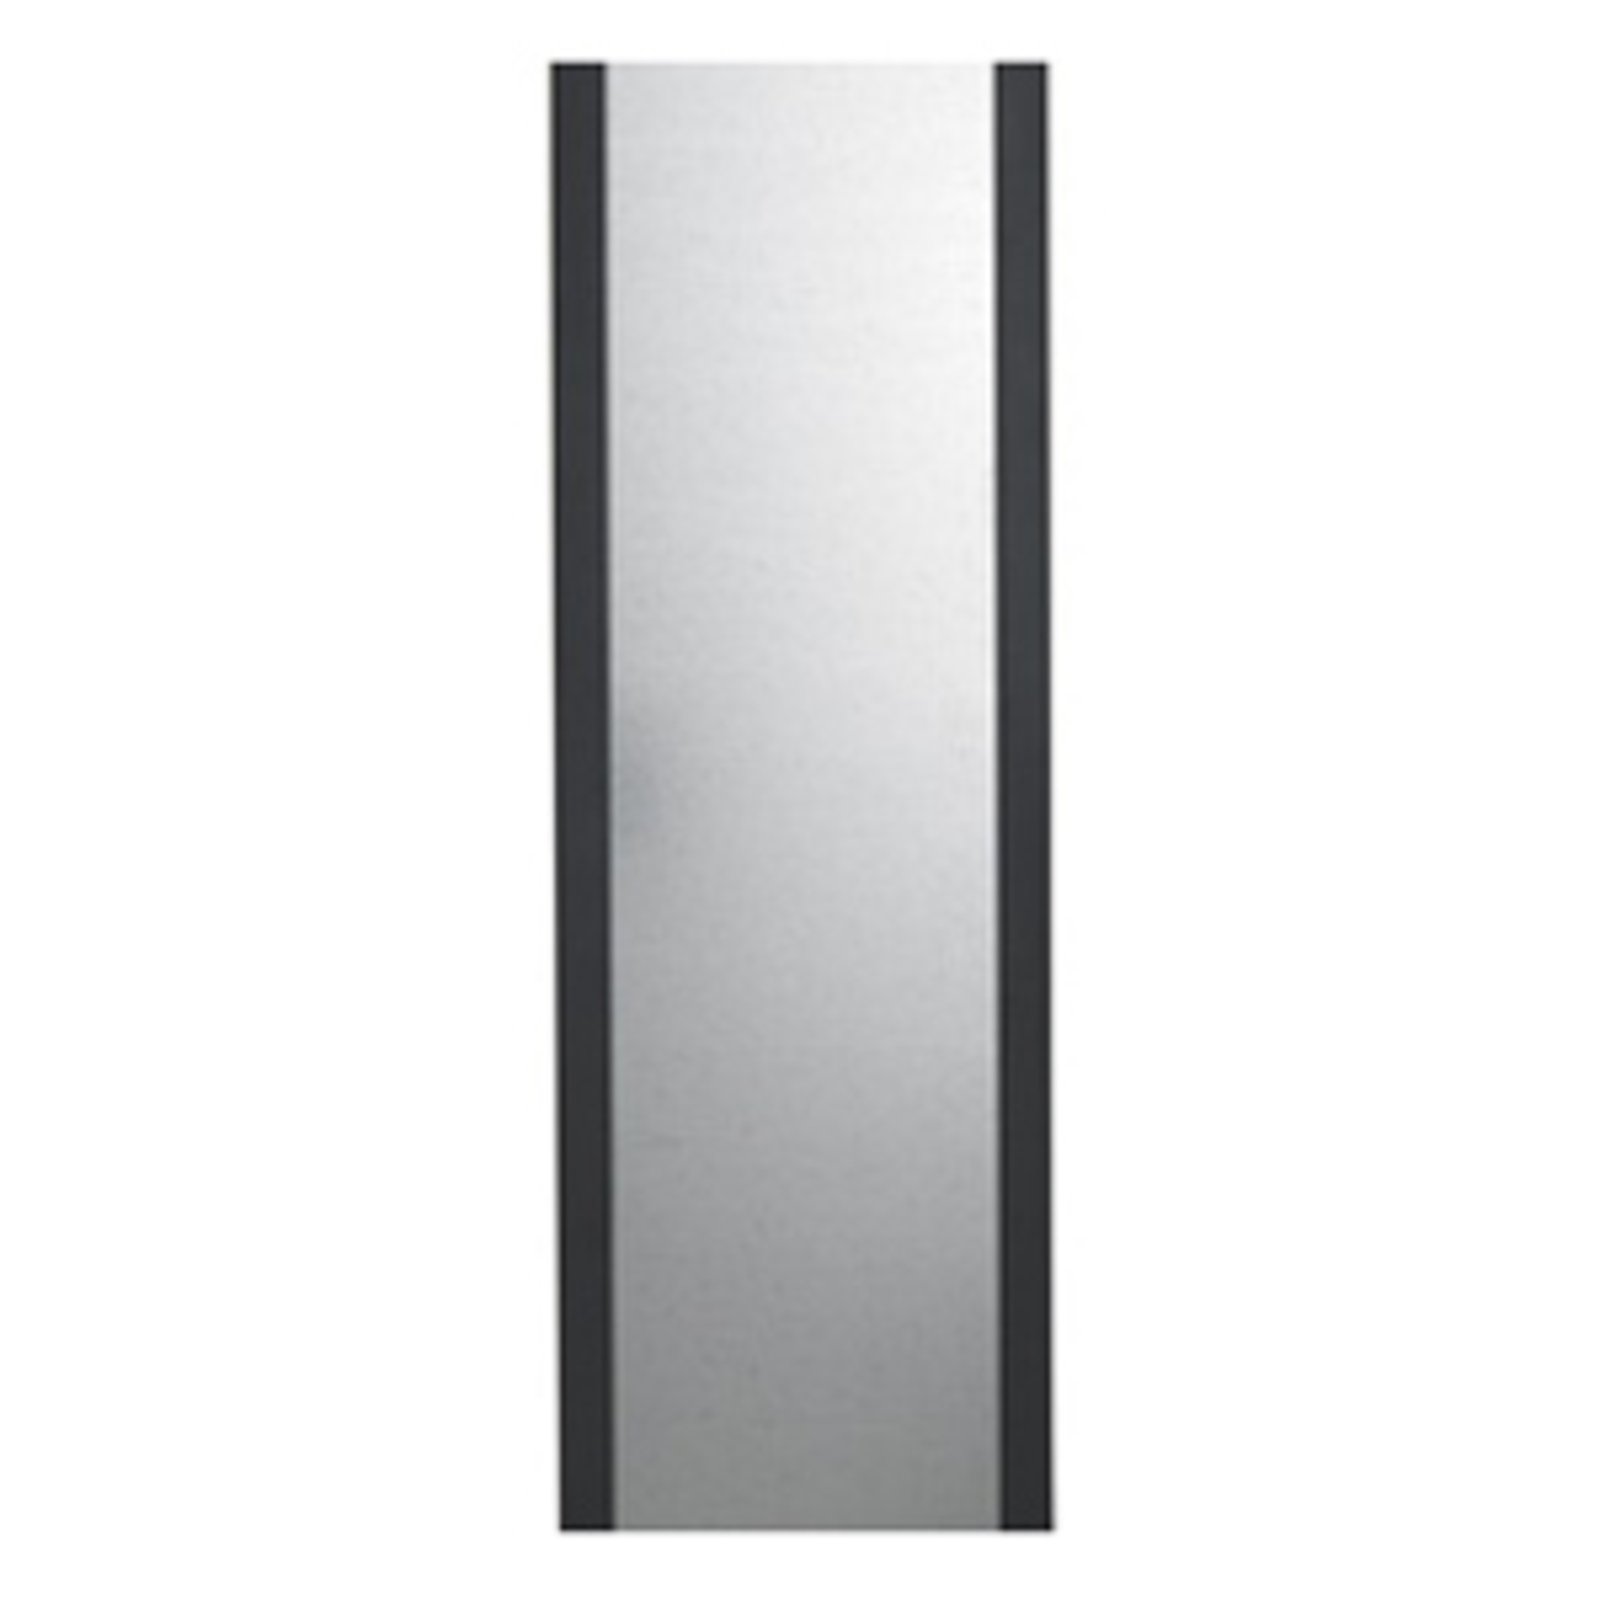 Elegant letterbox stand 1001 black/stainless steel